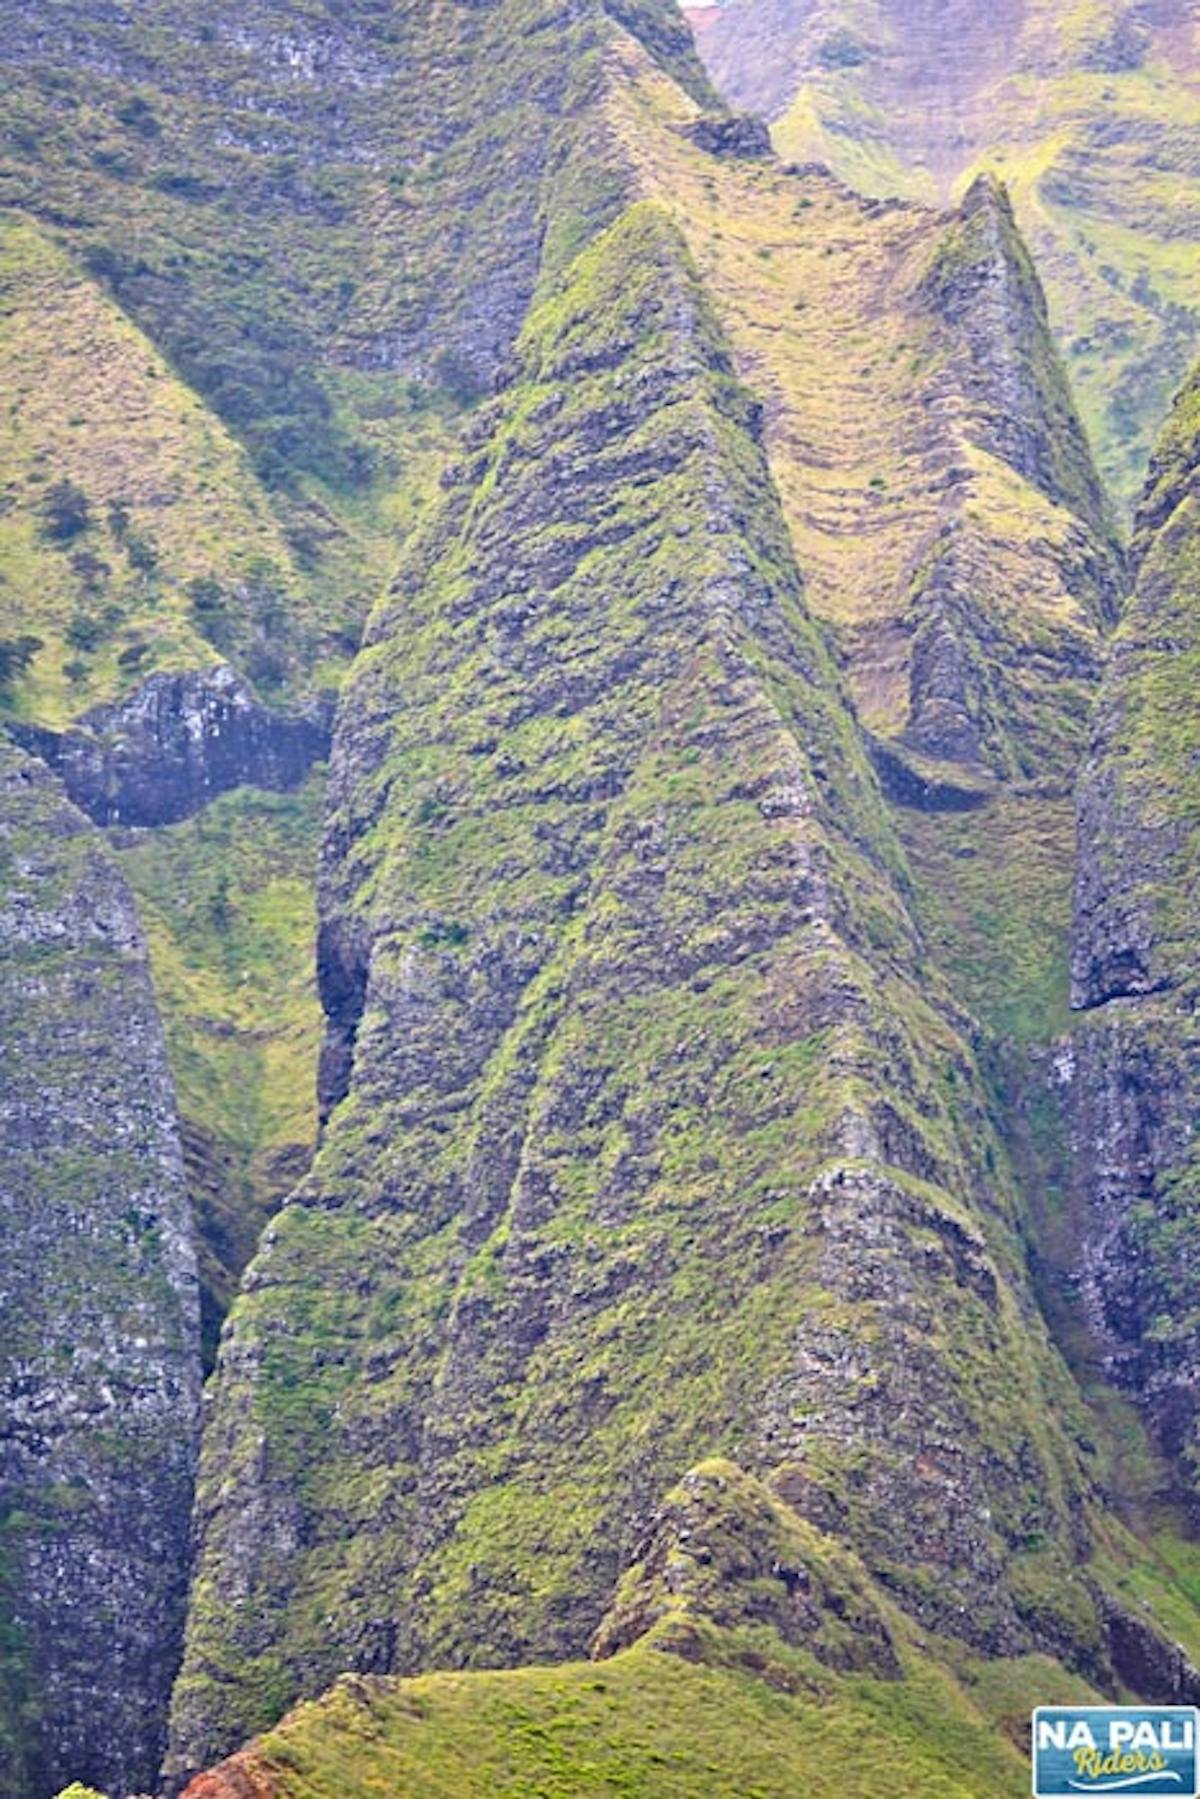 a close up of a hillside next to a mountain